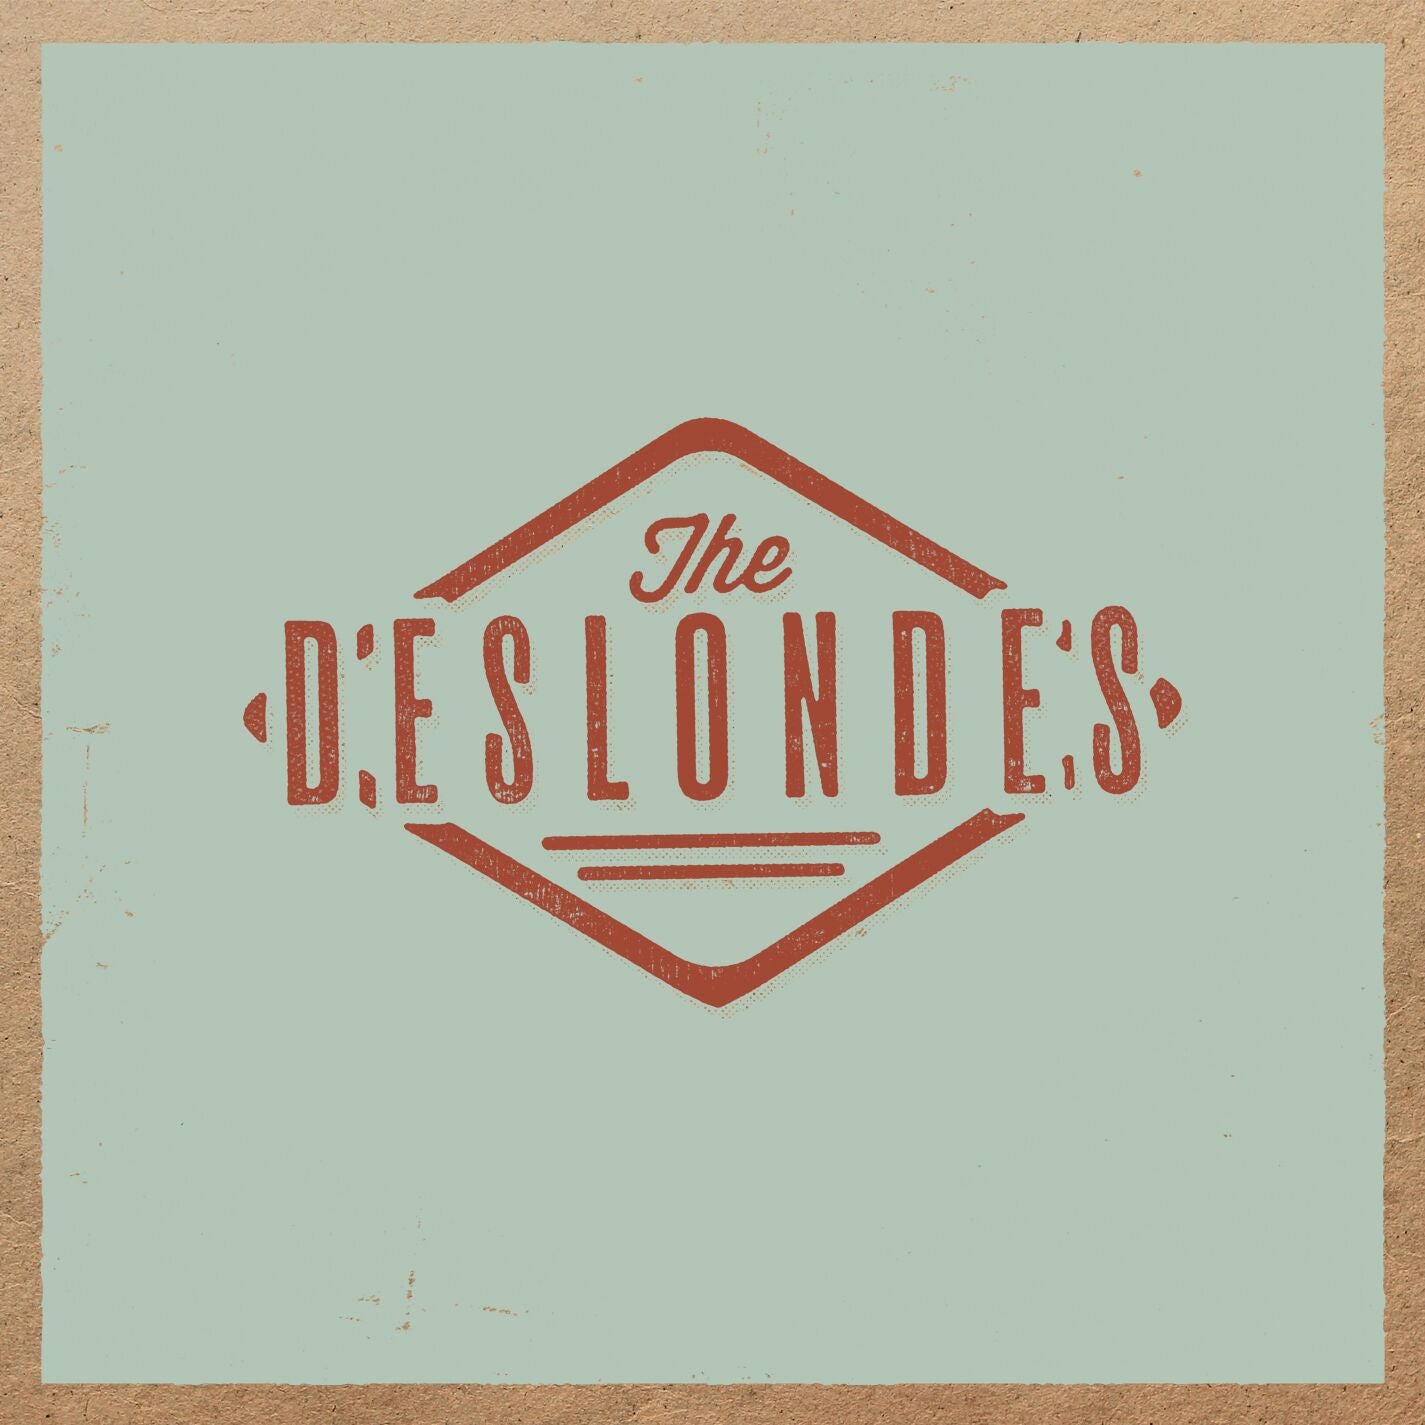 The Deslondes - The Deslondes [Cassette]